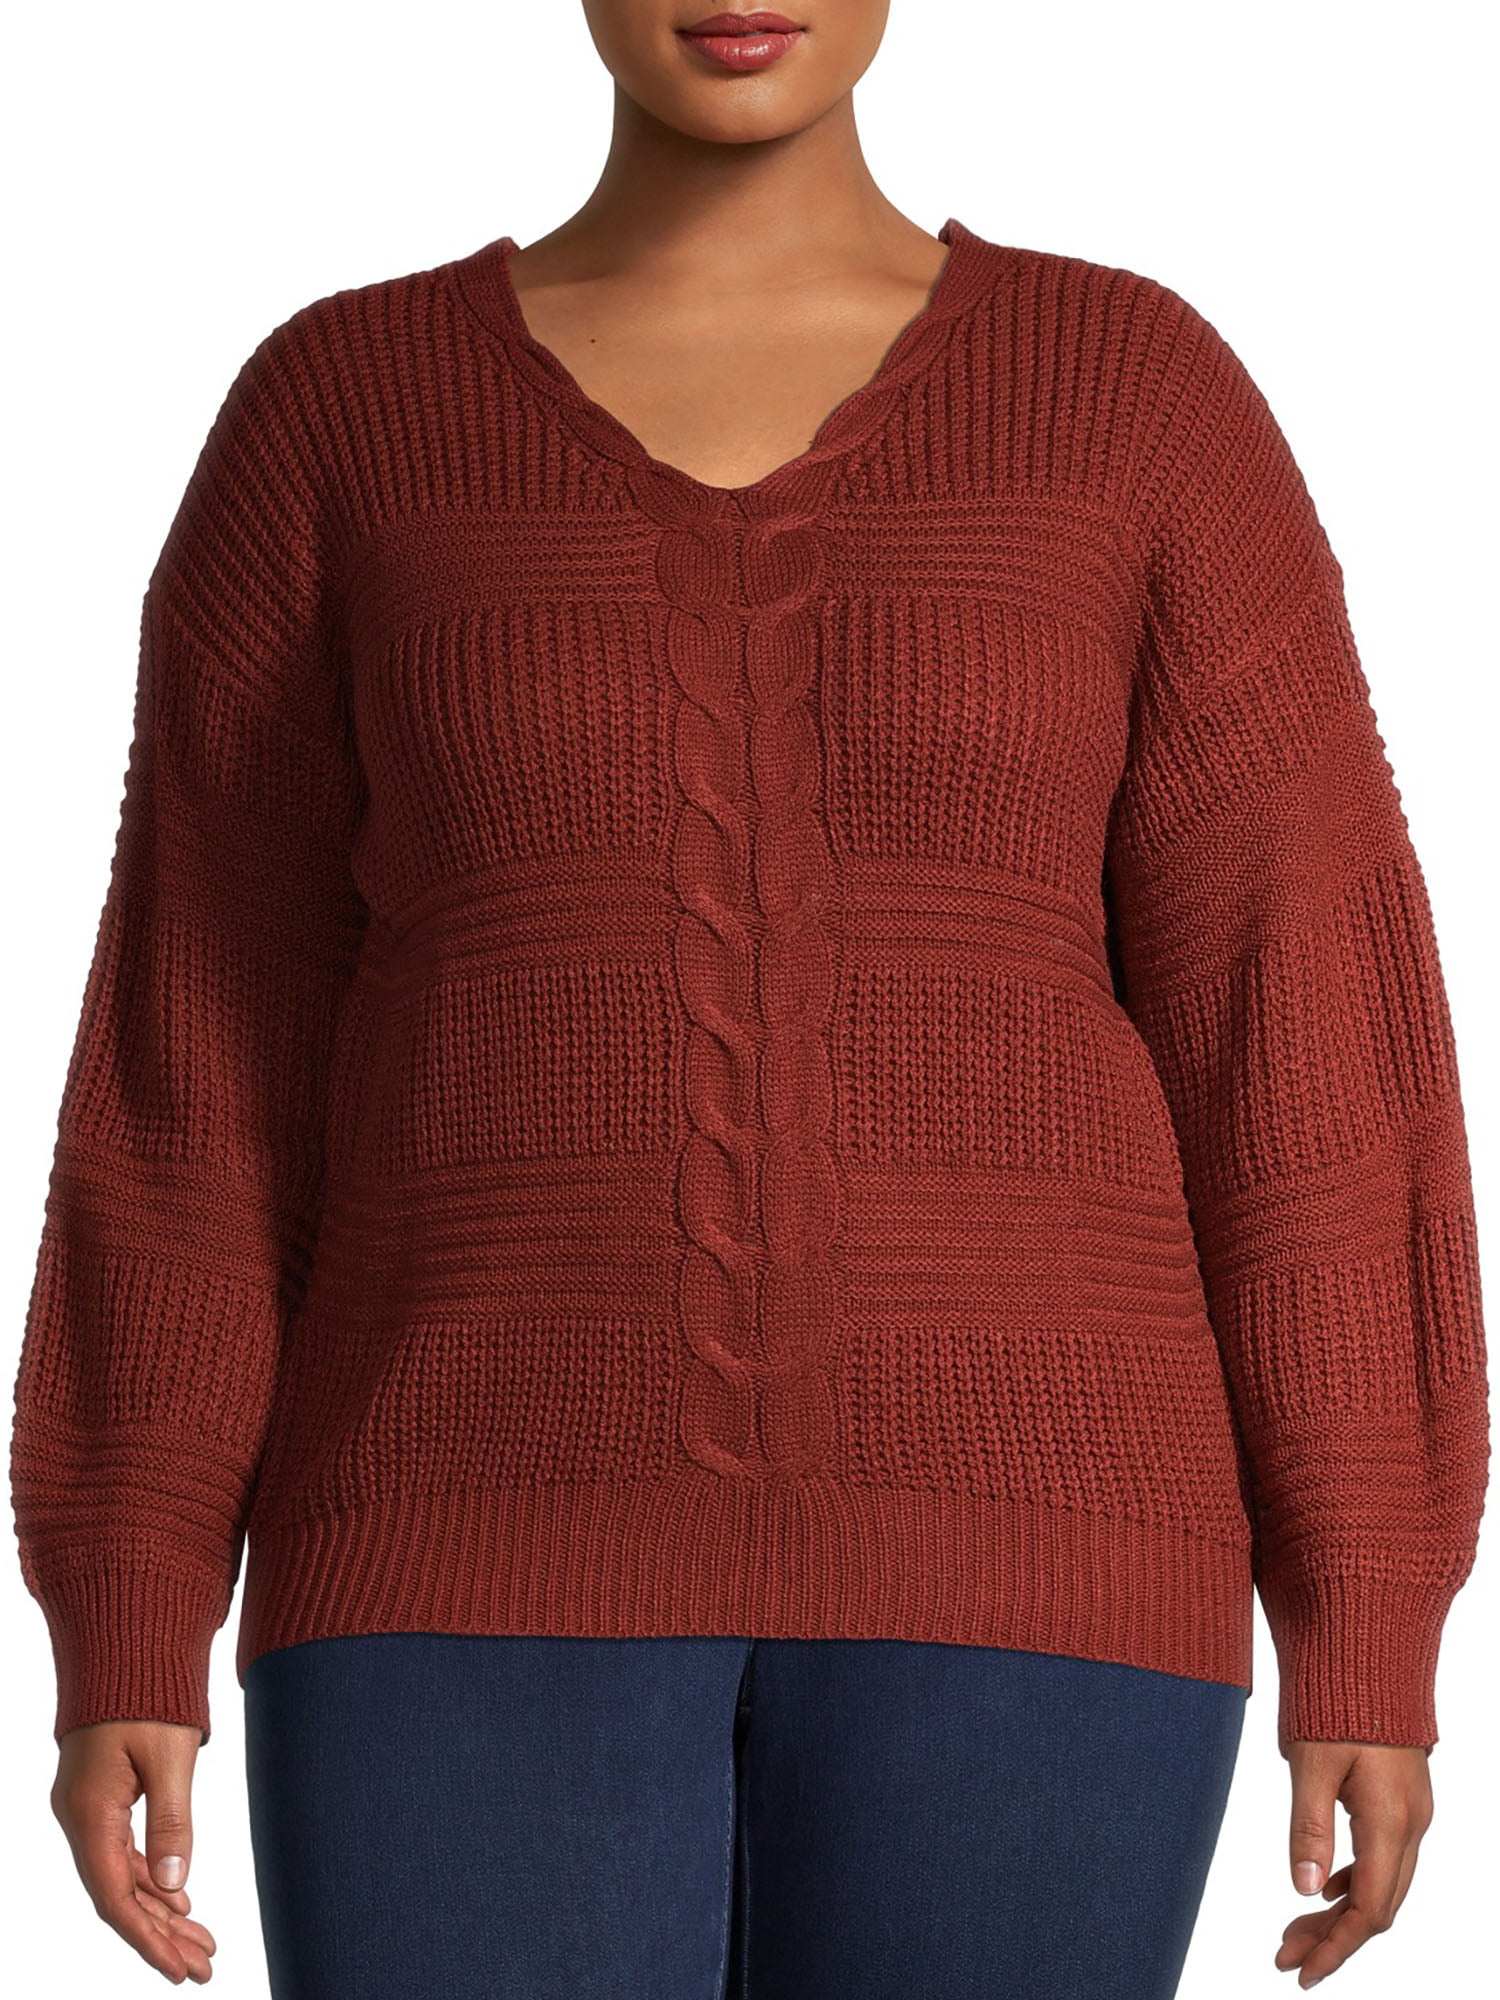 Women Plus Size Cardigan Knitted Sweater Long Sleeve Crochet V-Neck Tops